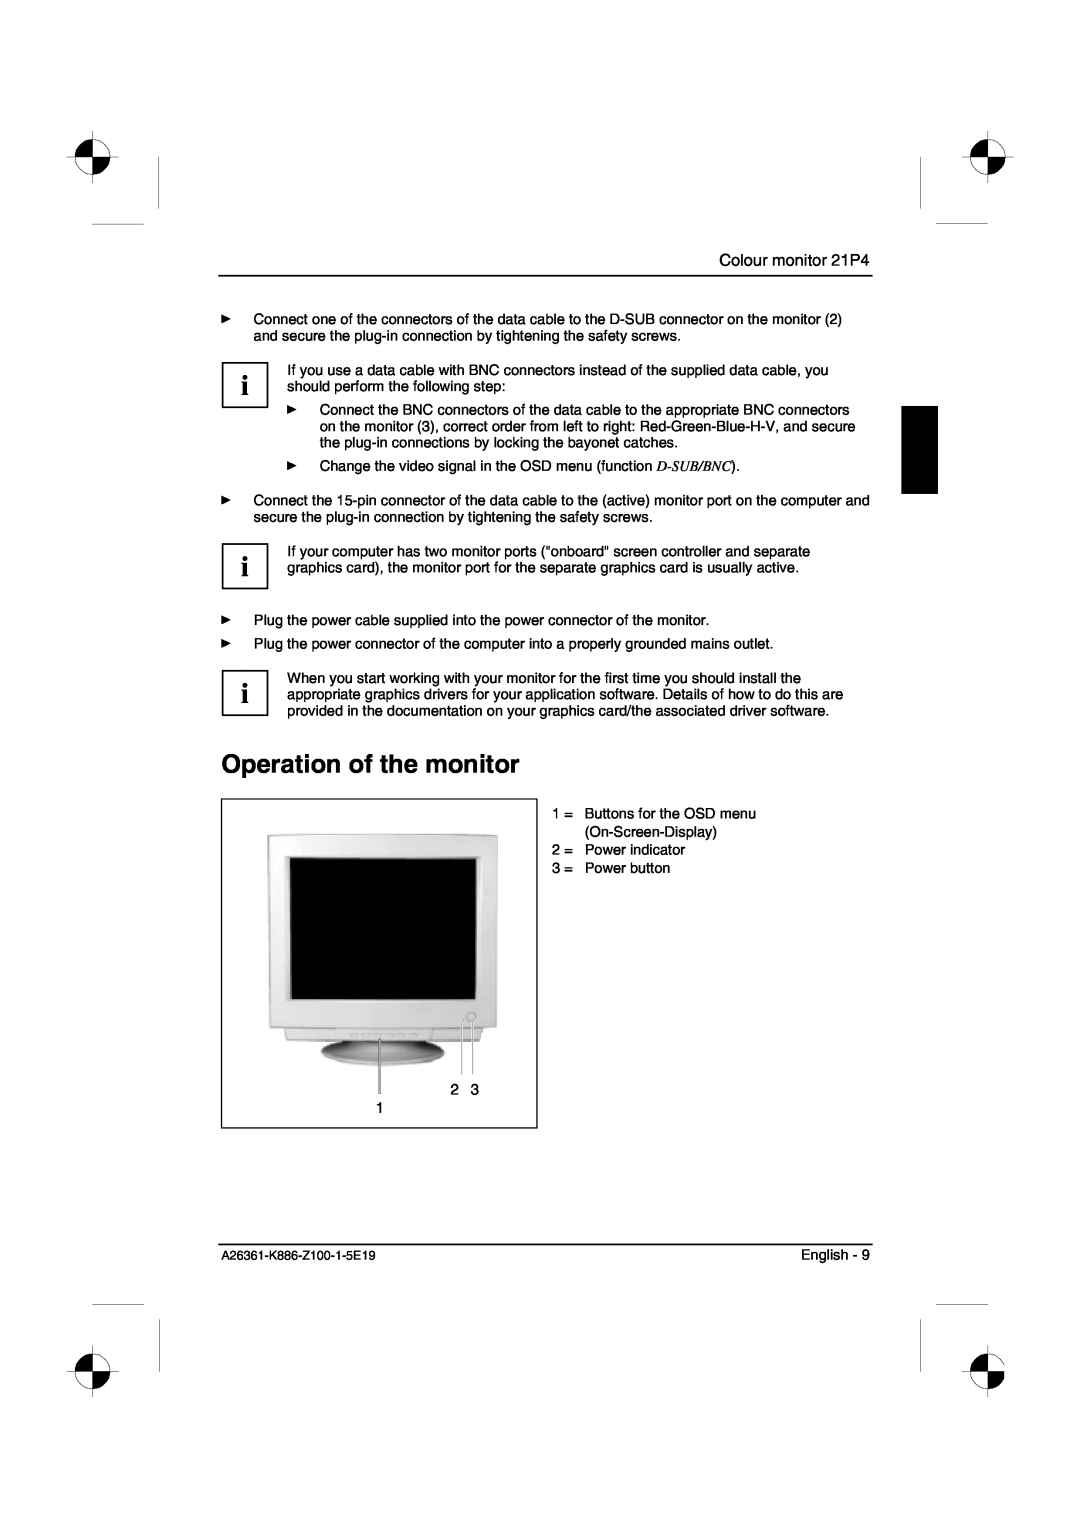 Fujitsu Siemens Computers manual Operation of the monitor, Colour monitor 21P4 